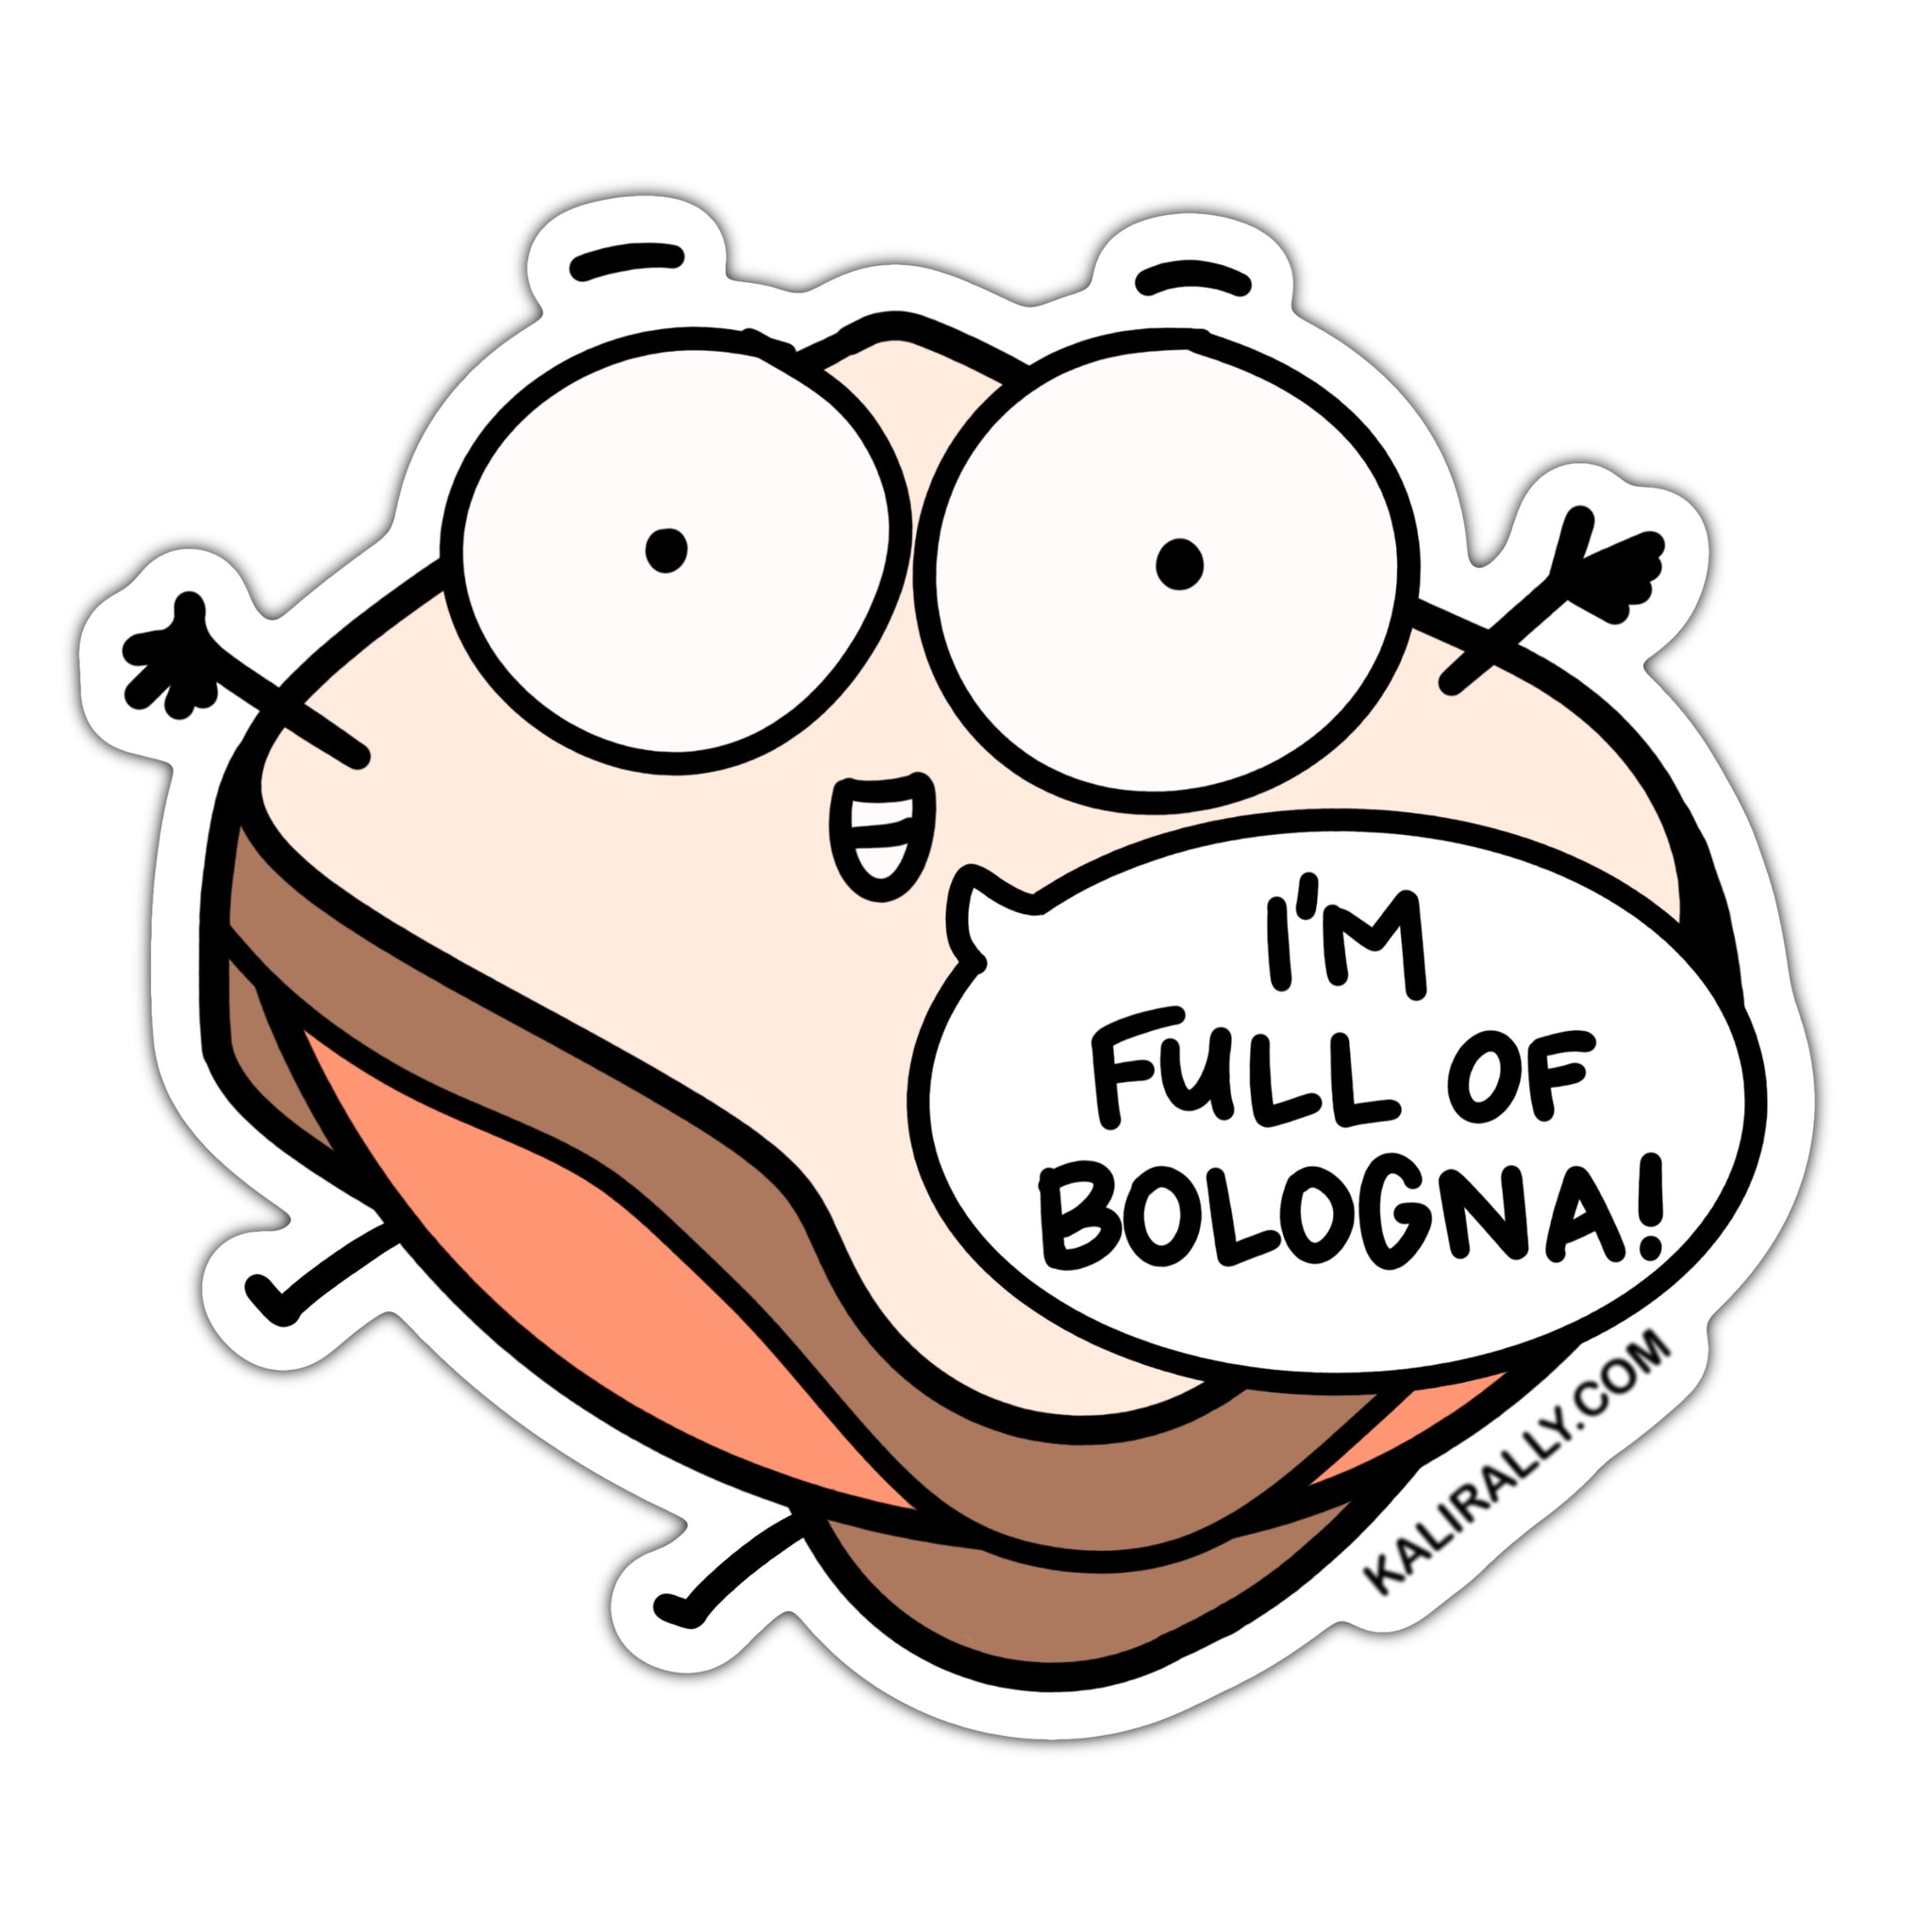 I'm full of balogna sticker, funny balogna sandwich sticker, for sandwich lovers, waterproof vinyl sticker, kalirally decal